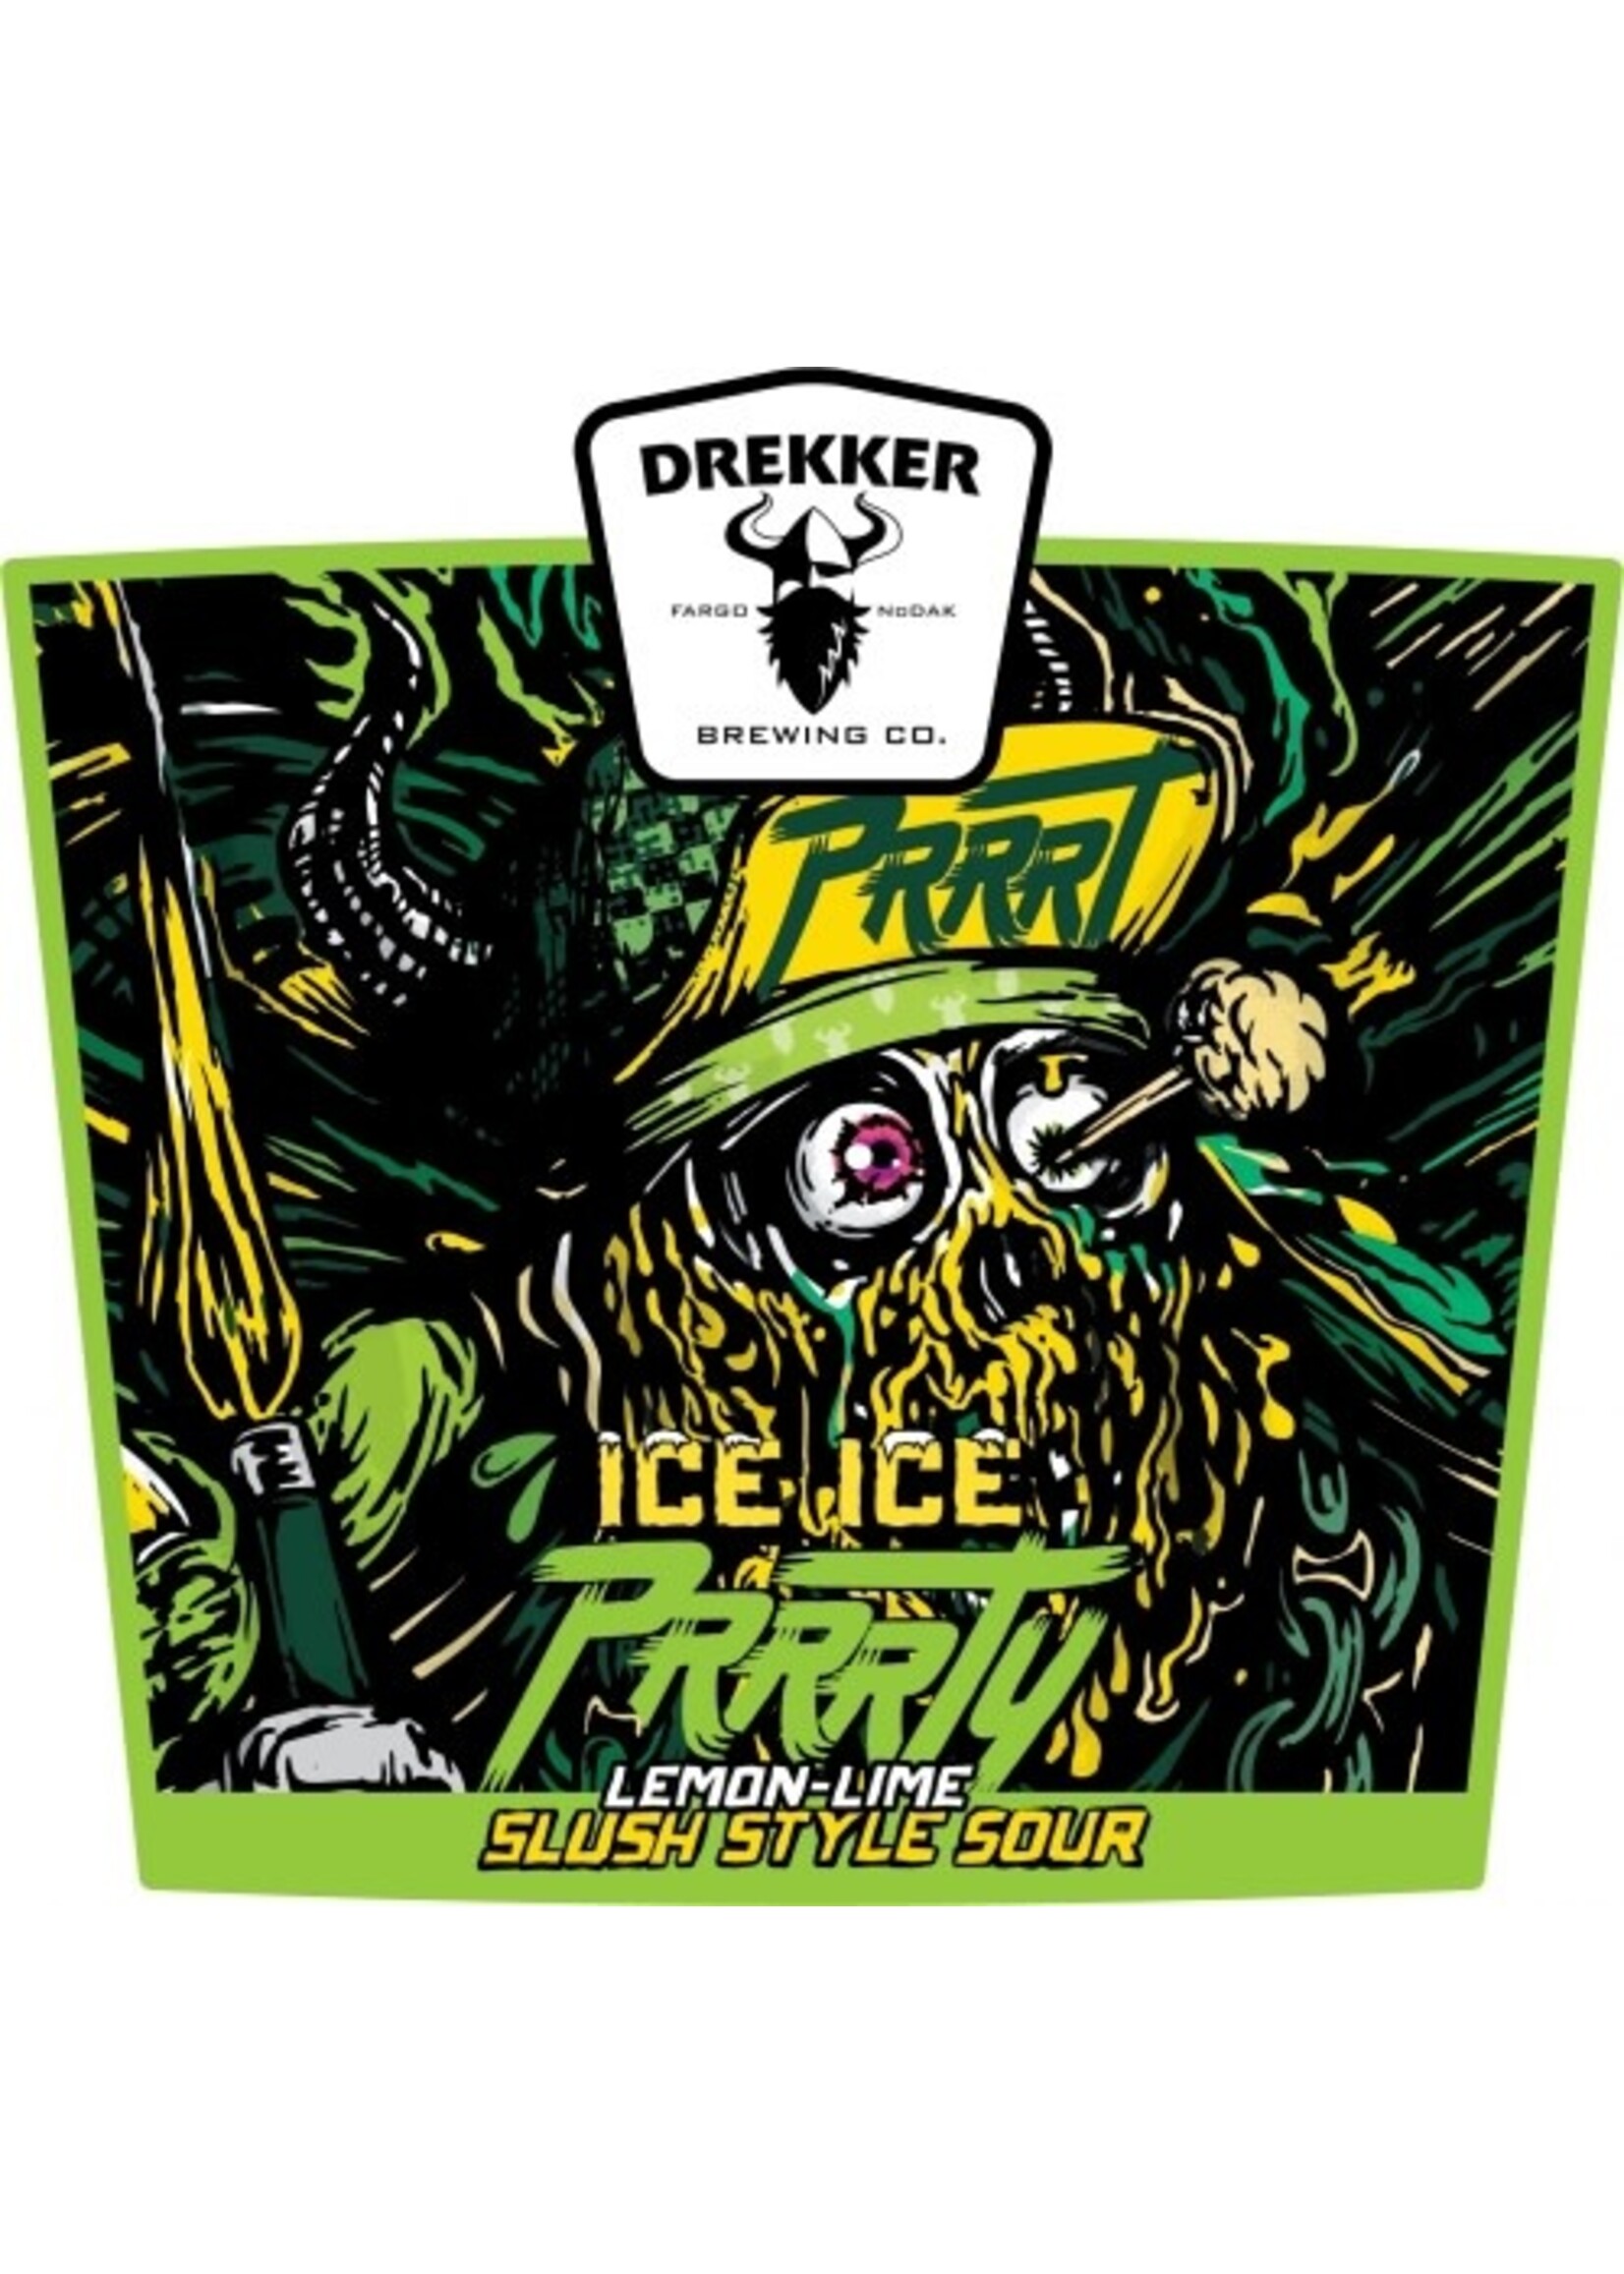 Drekker Brewing Co. Beer 4Pack - Drekker Brewing Co. - Ice Ice Prrrty Lemon-lime